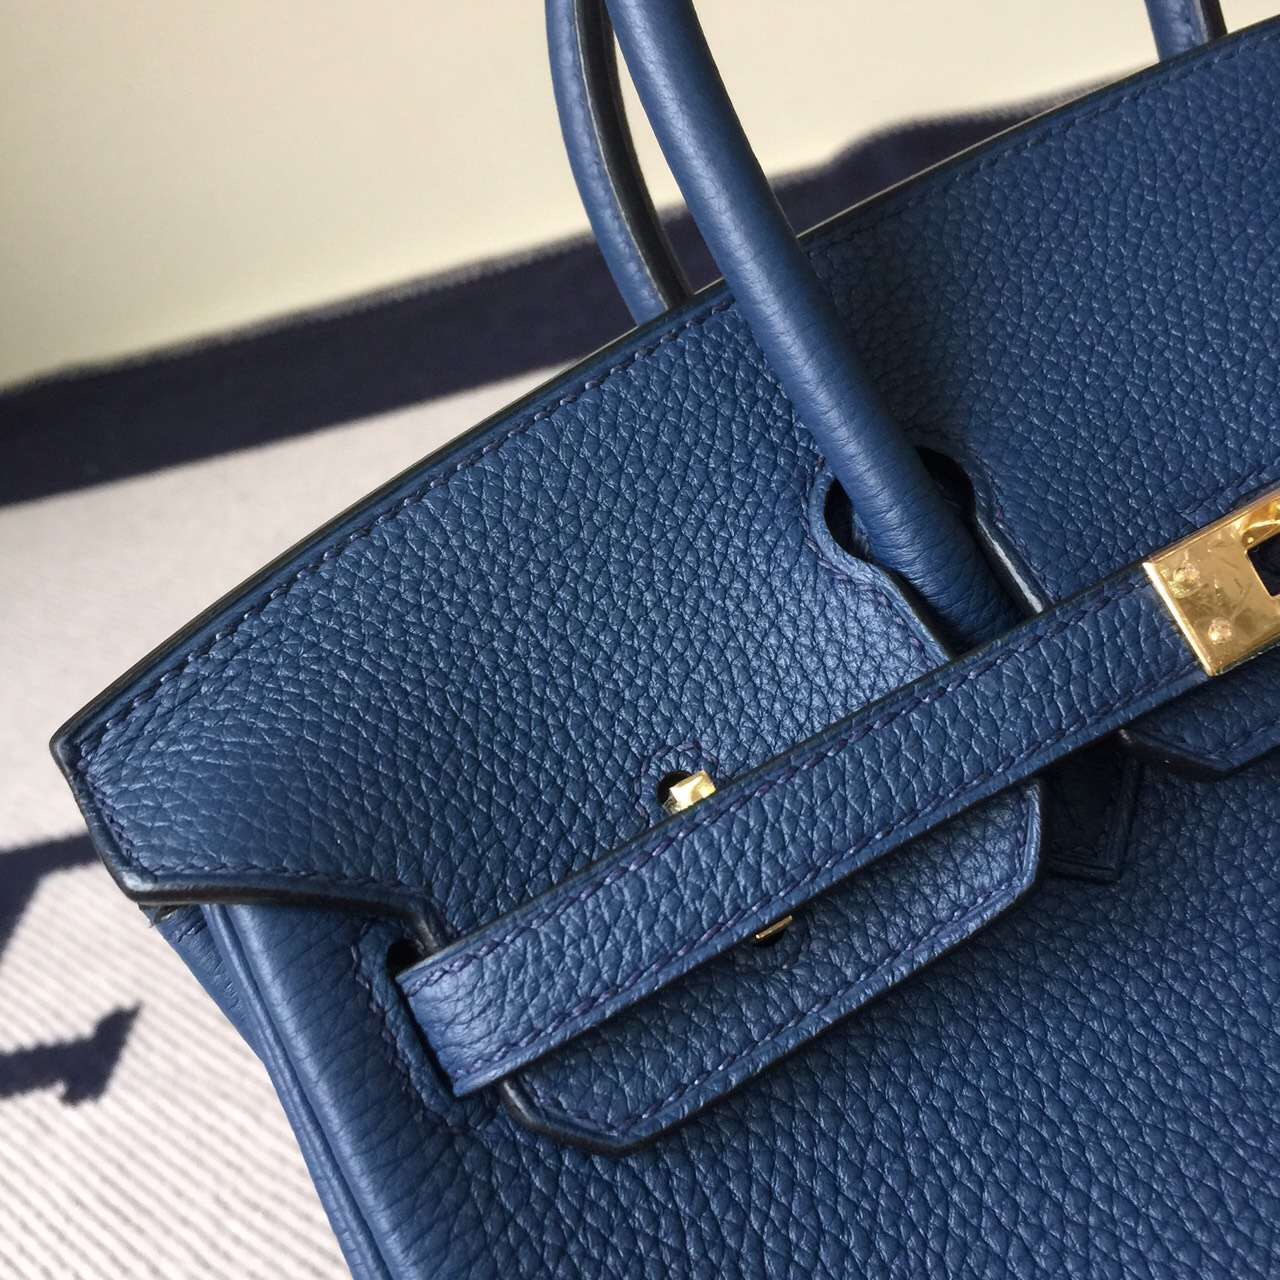 Discount Hermes Togo Calfskin Leather Birkin25cm Bag in Blue Duck